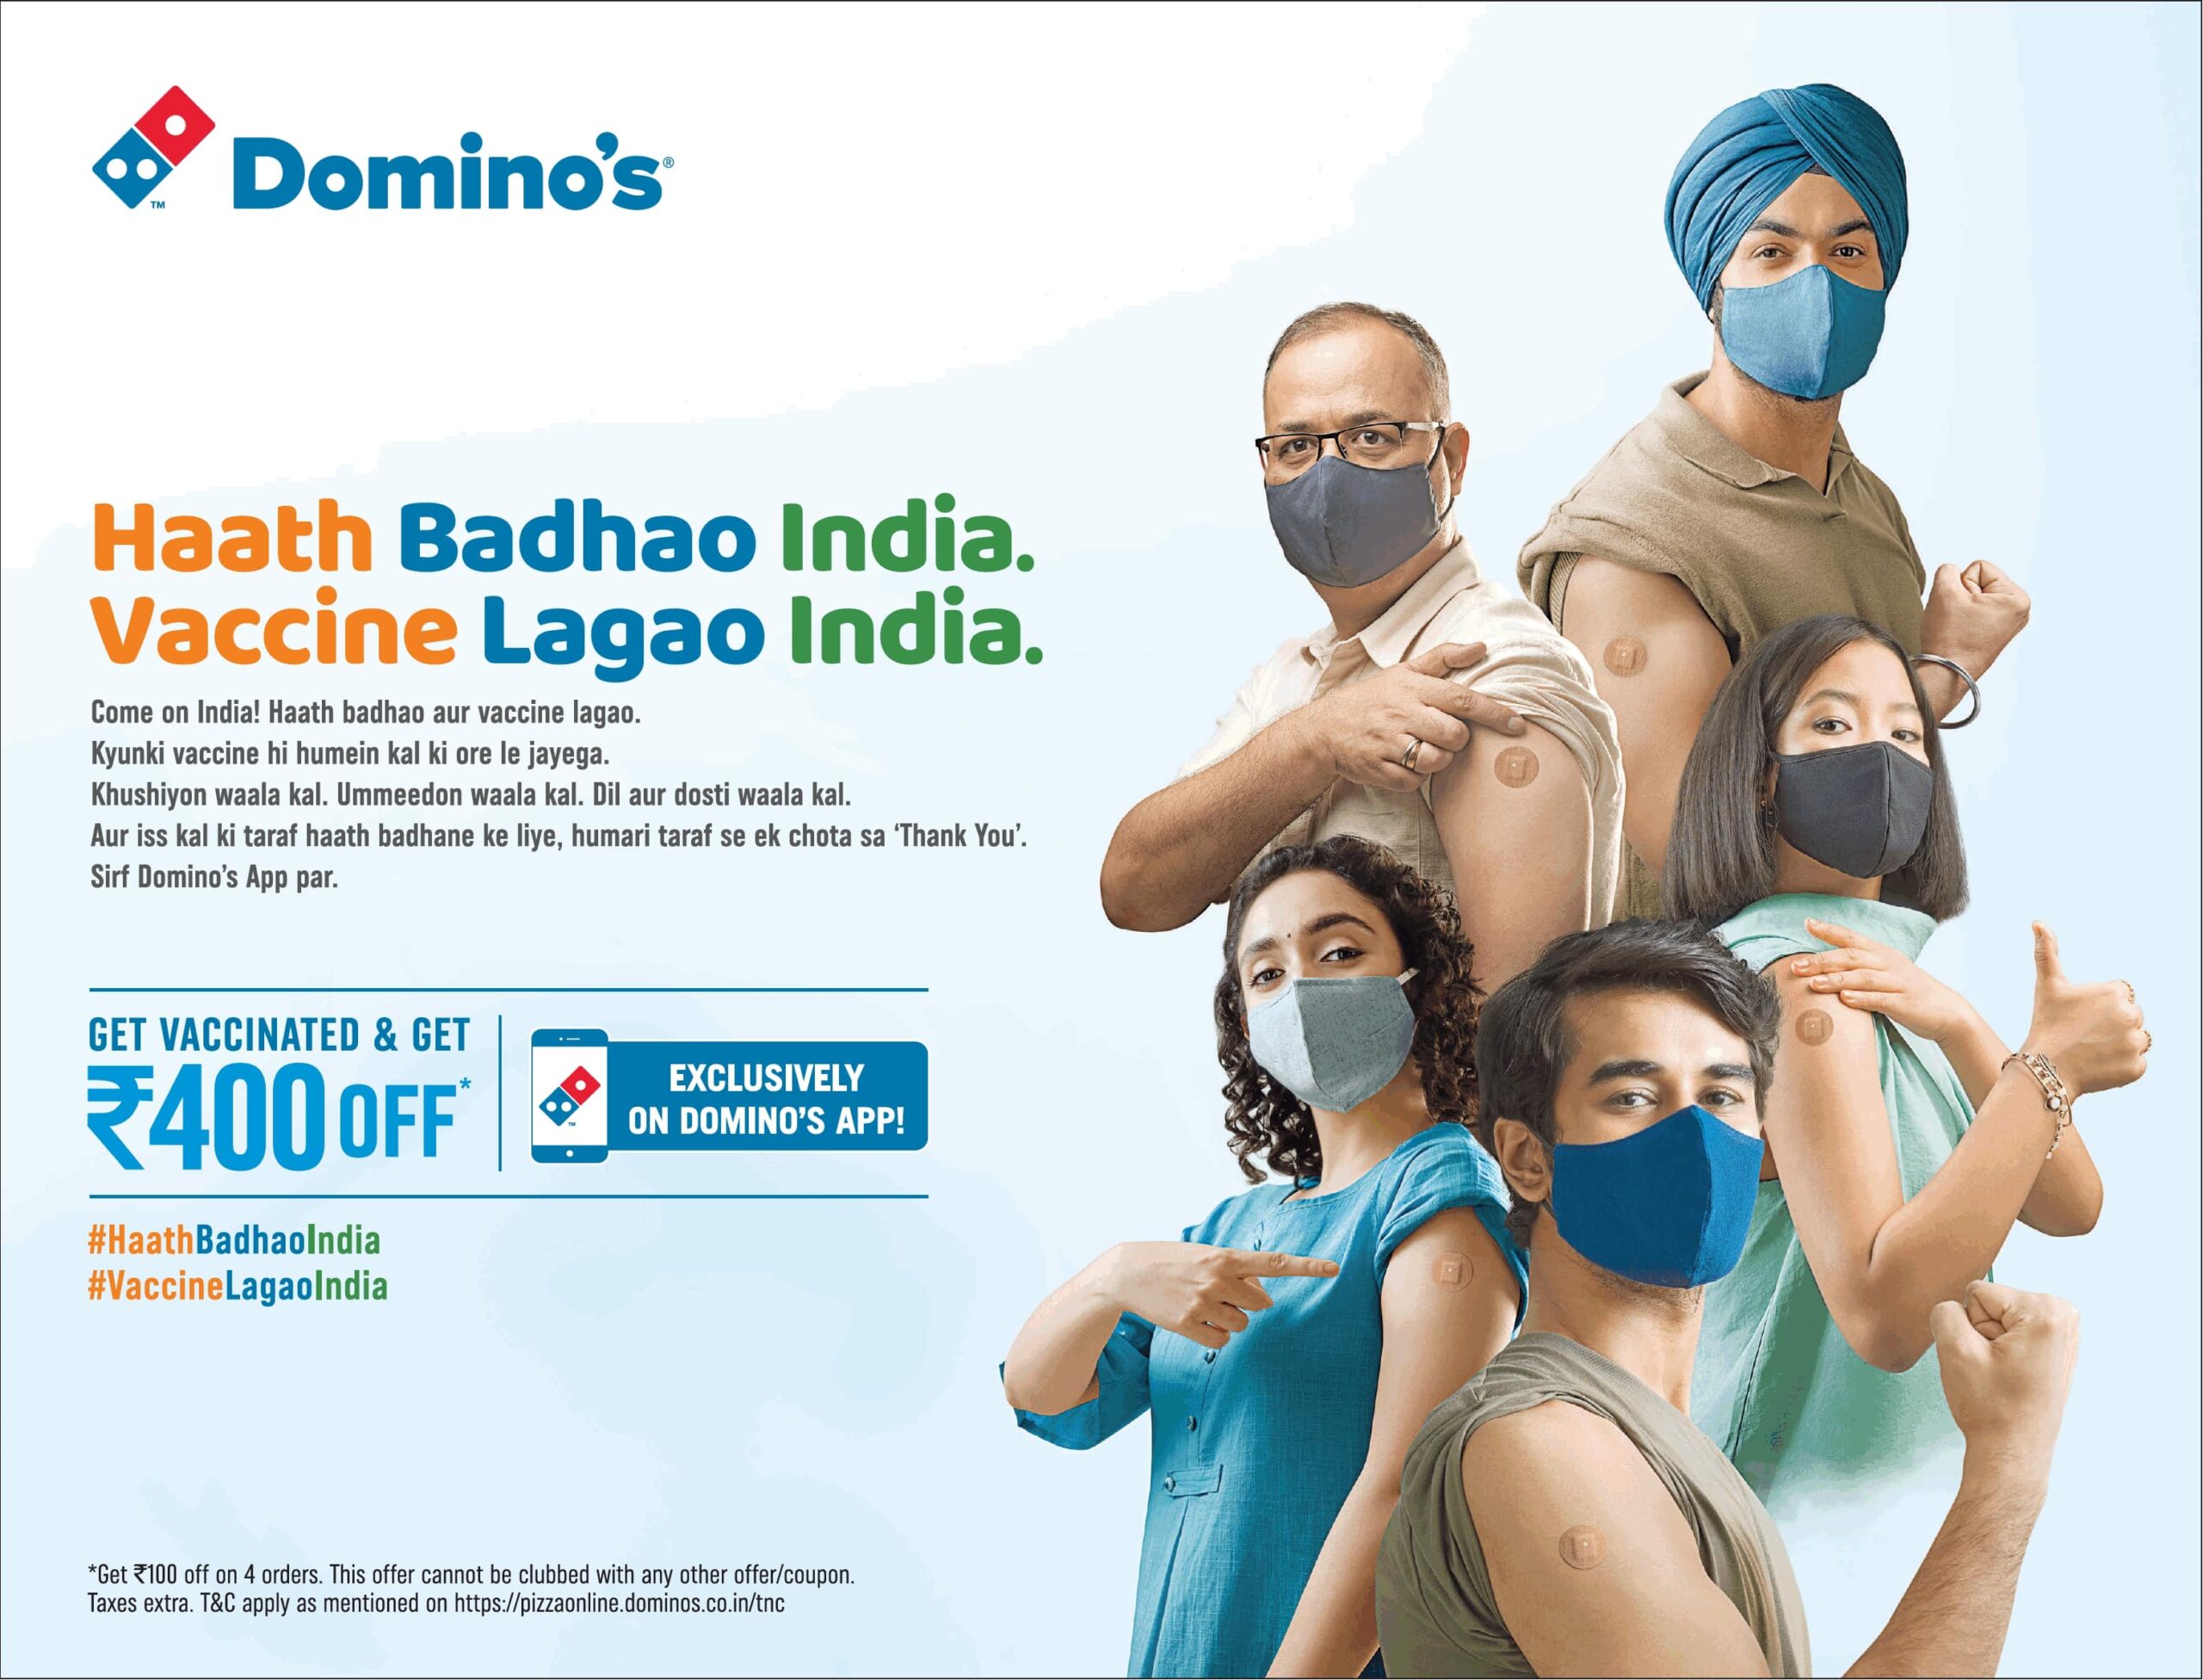 dominos-haath-badhoo-india-vaccine-lagao-india-ad-times-of-india-delhi-03-07-2021